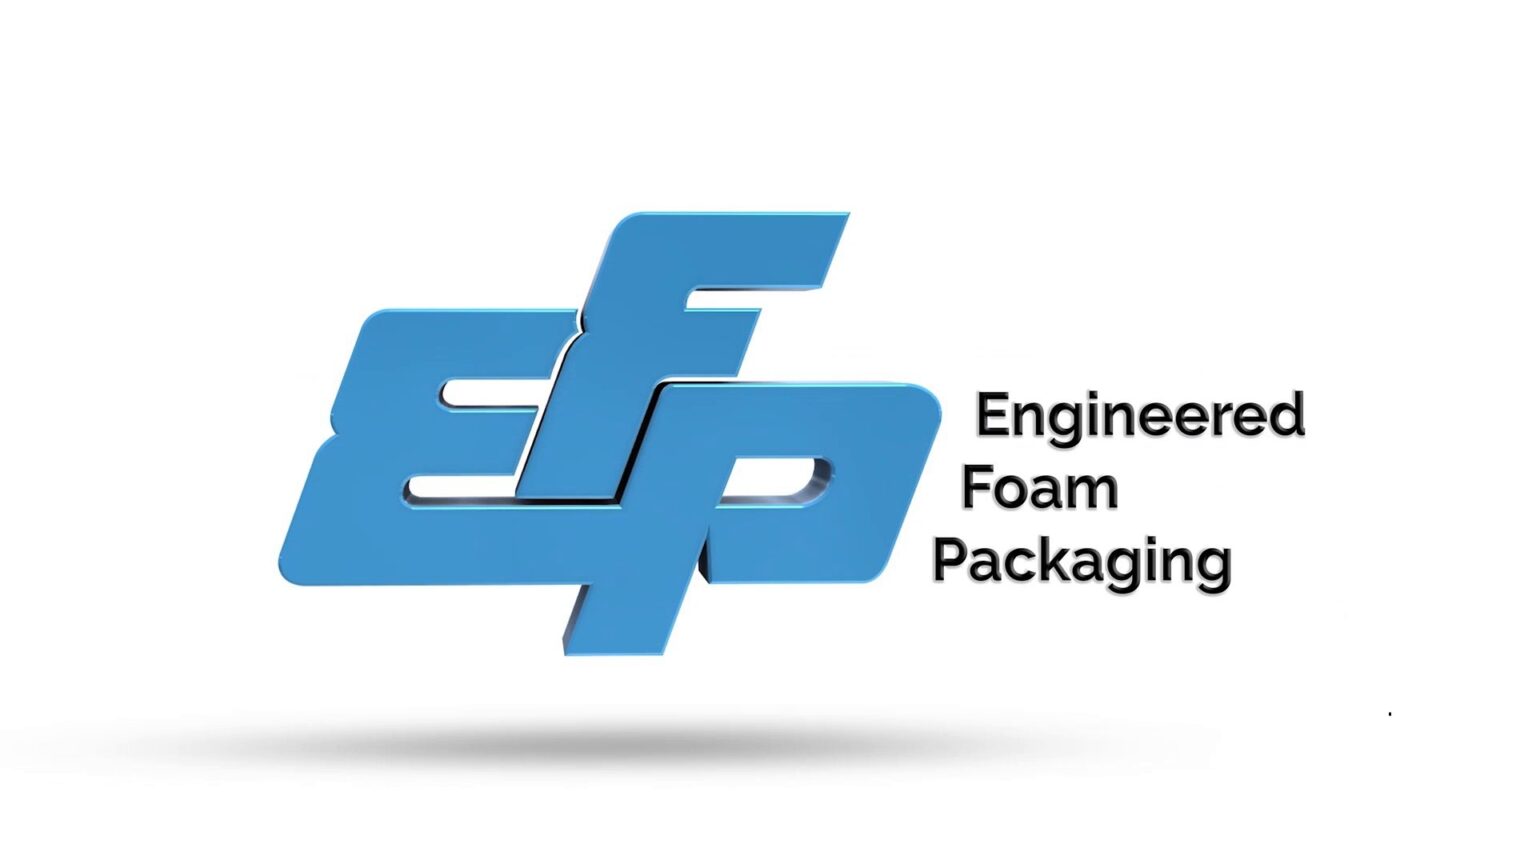 EFP logo